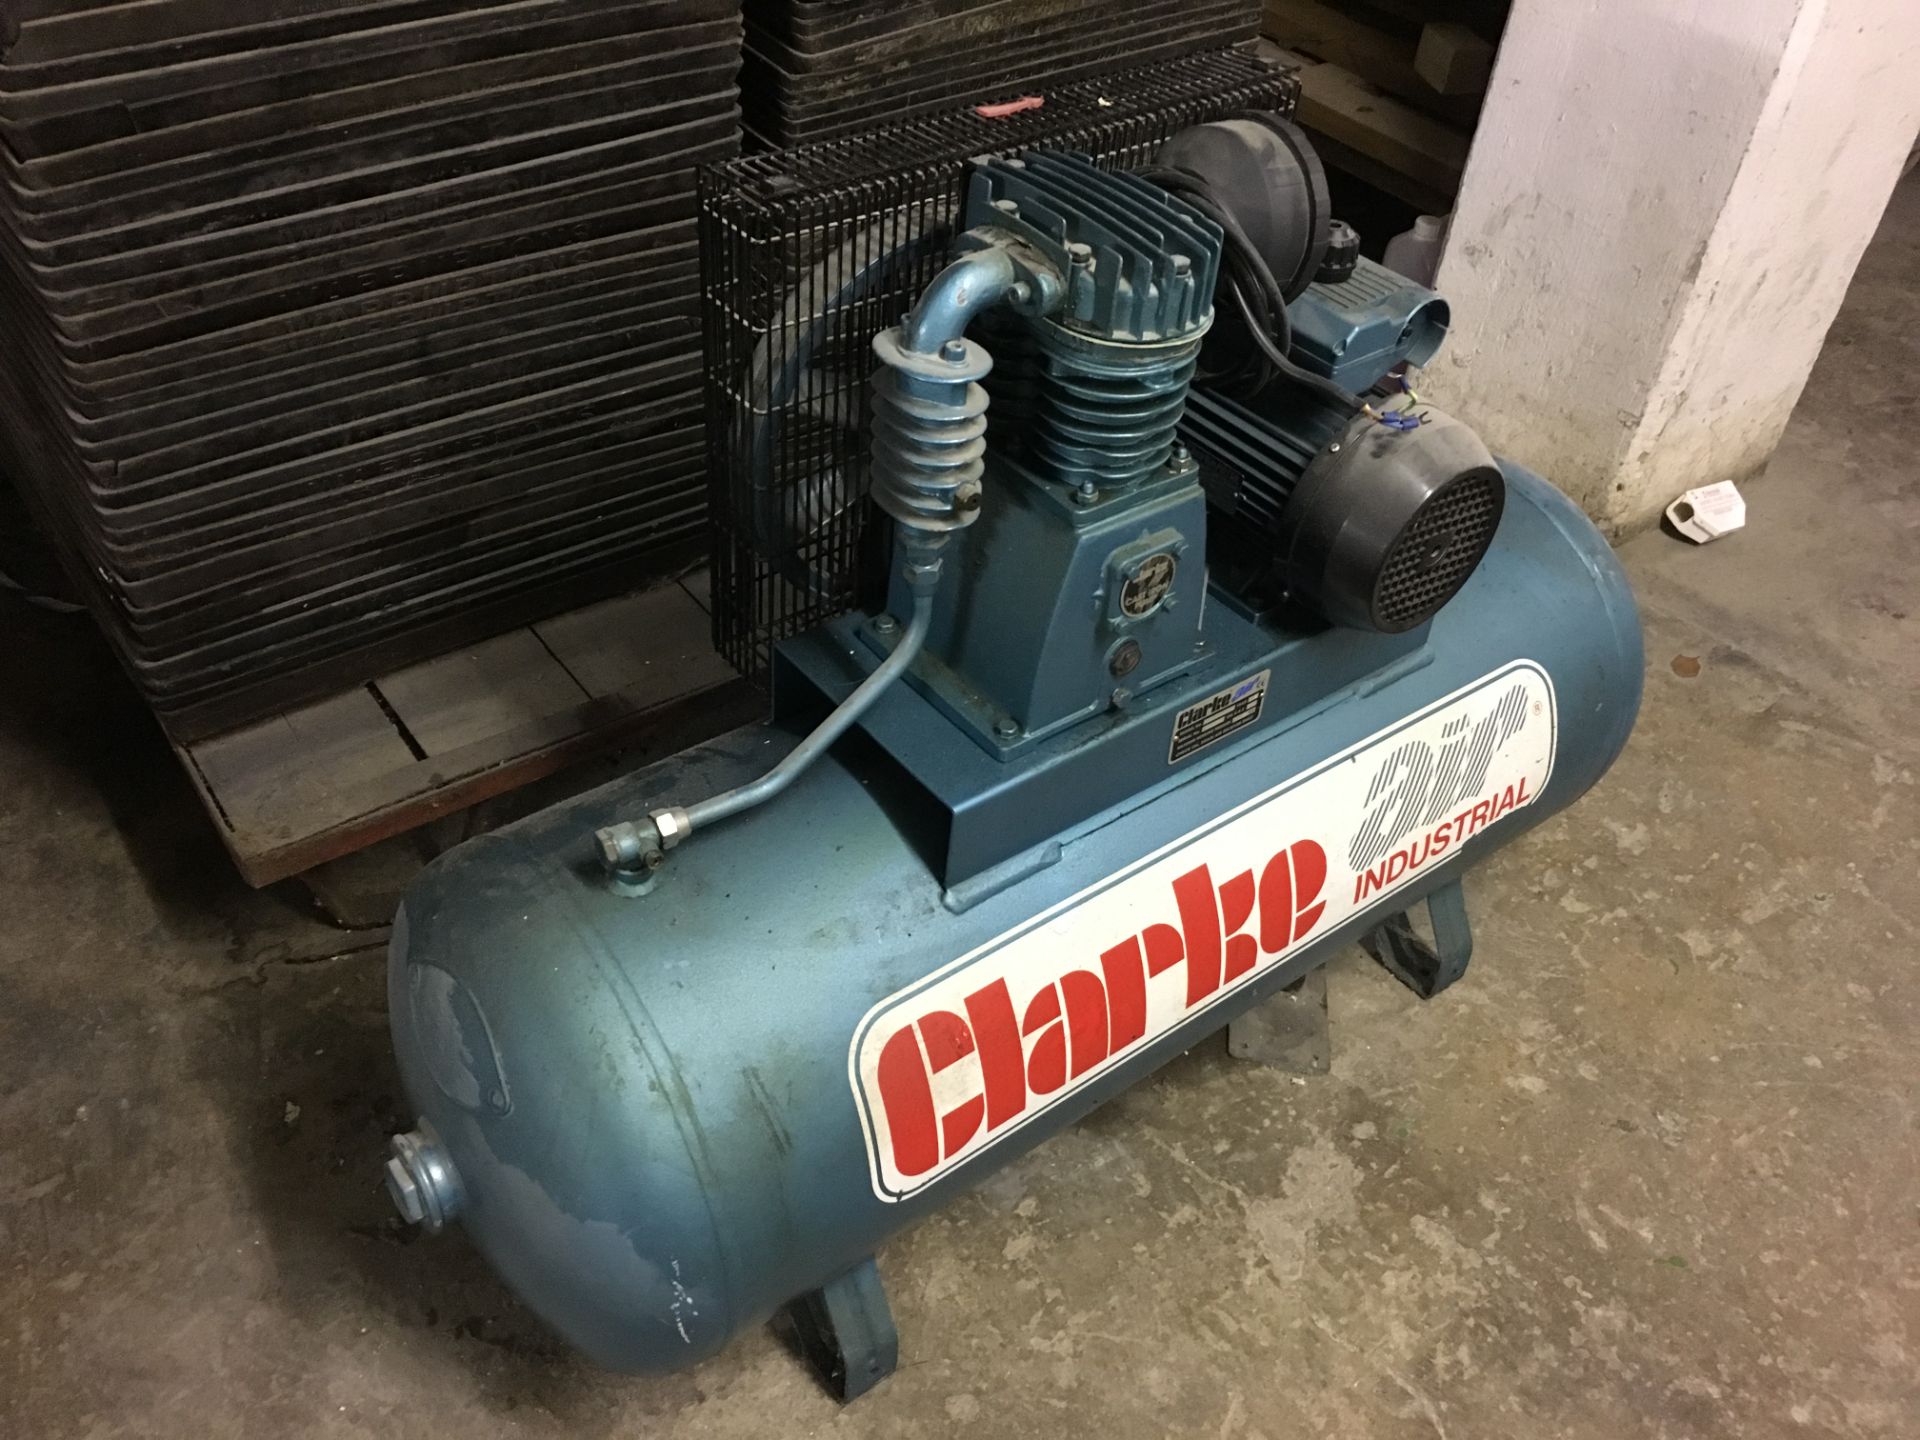 ClarkeAir Industrial Air Compressor - Spares & Repairs